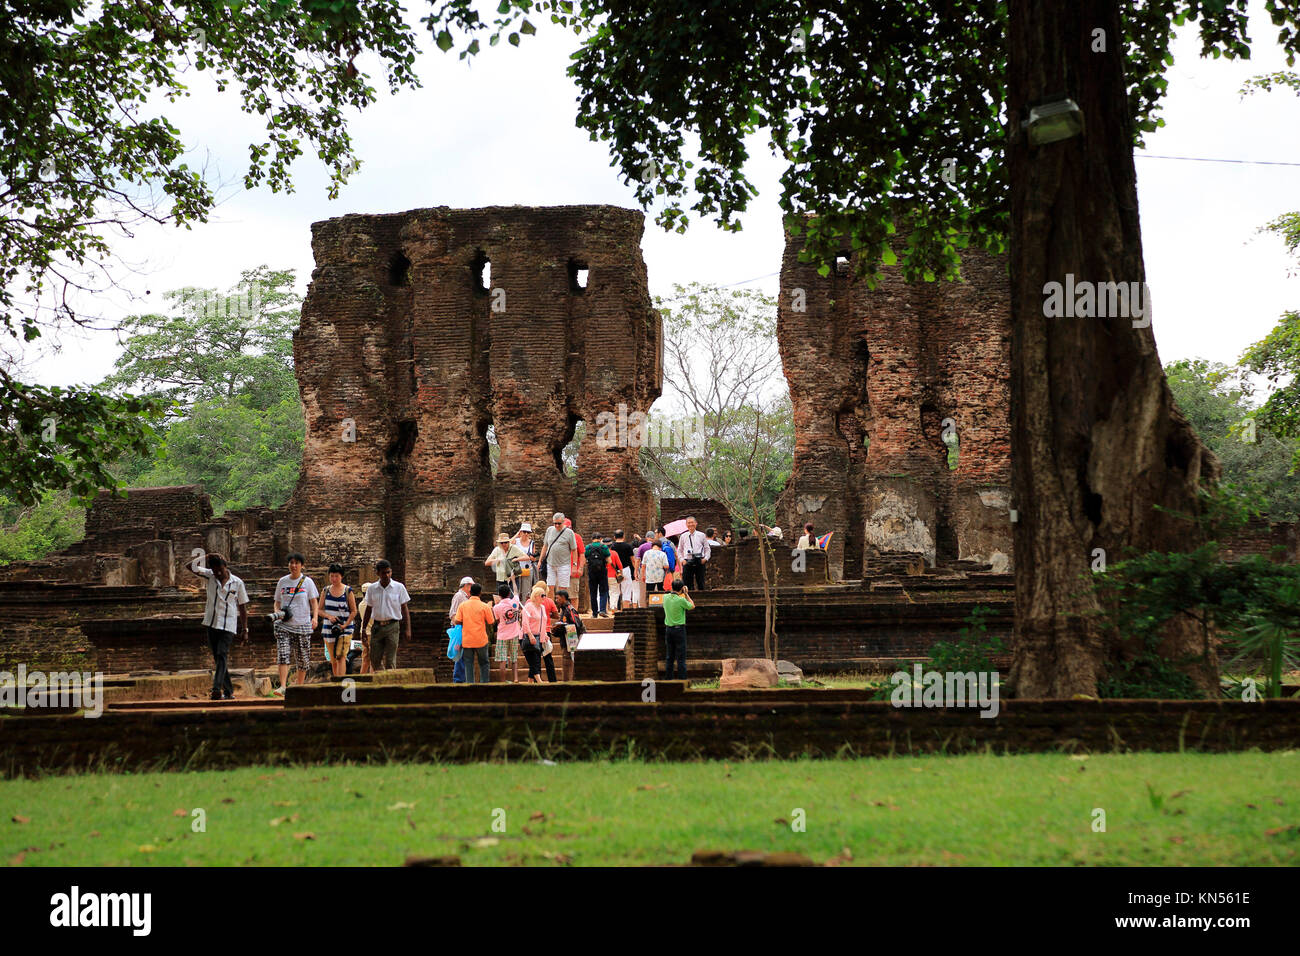 Royal Palace, Citadel, UNESCO World Heritage Site, the ancient city of Polonnaruwa, Sri Lanka, Asia Stock Photo